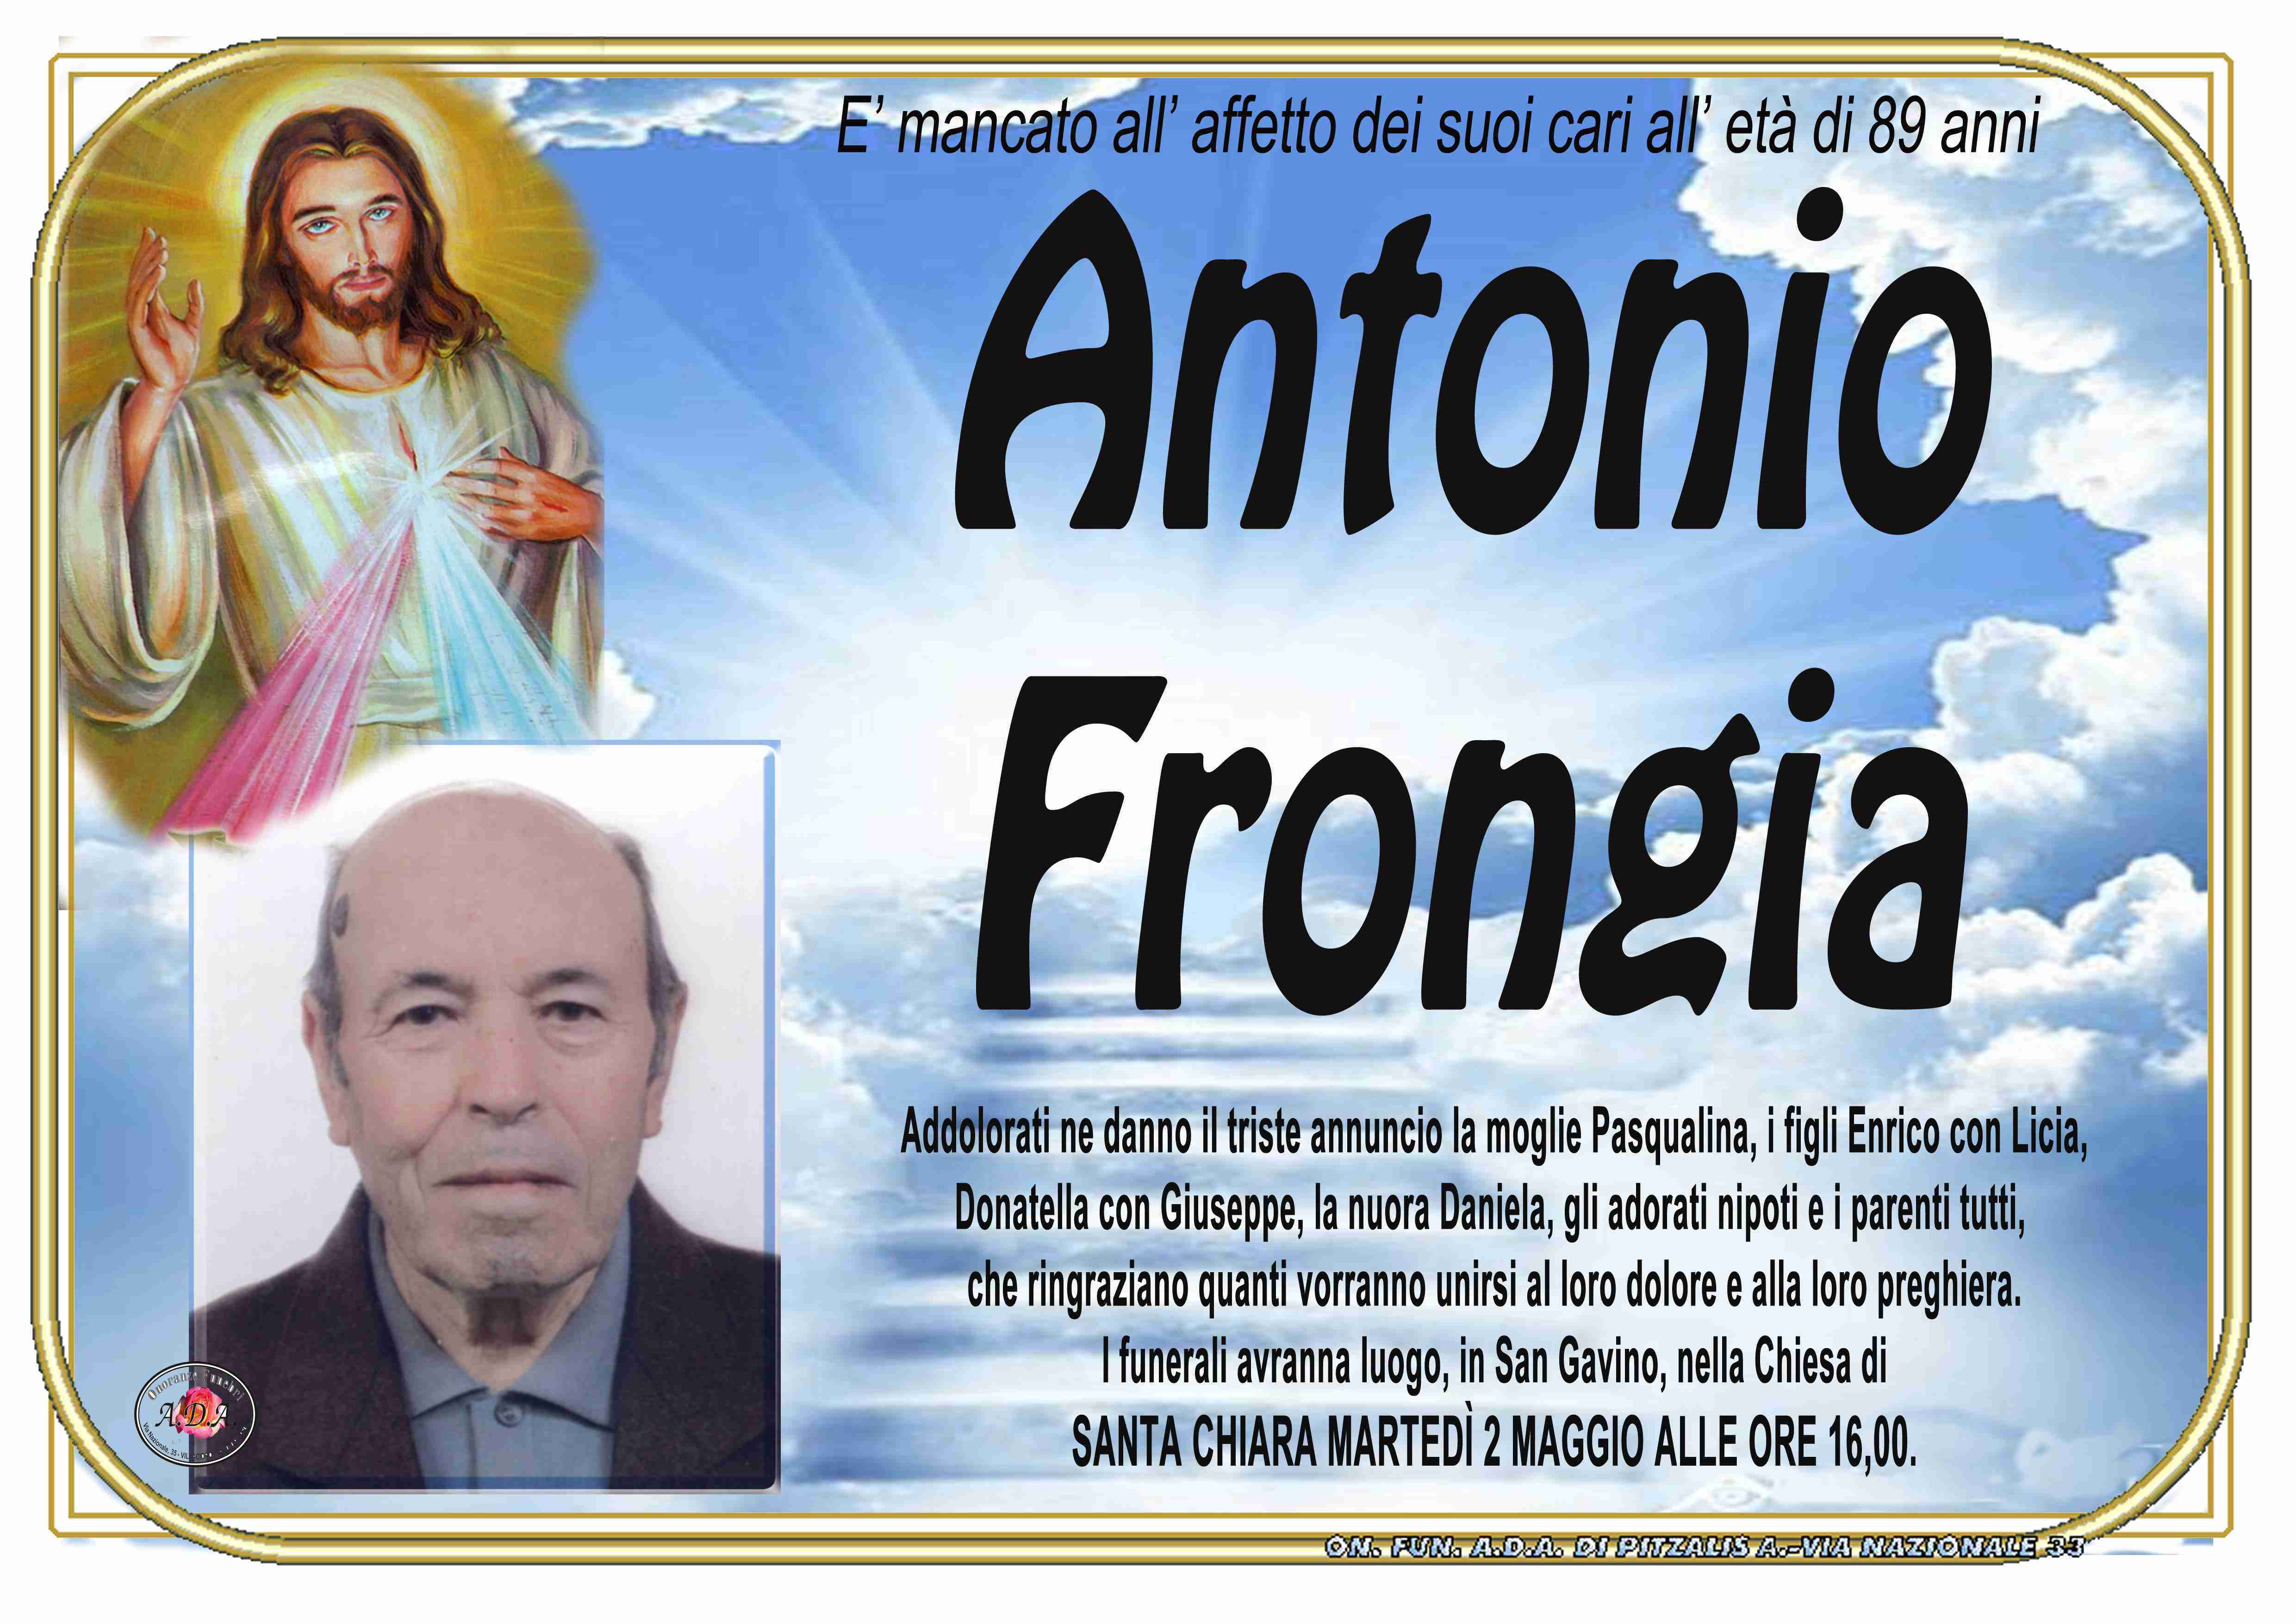 Antonio Frongia